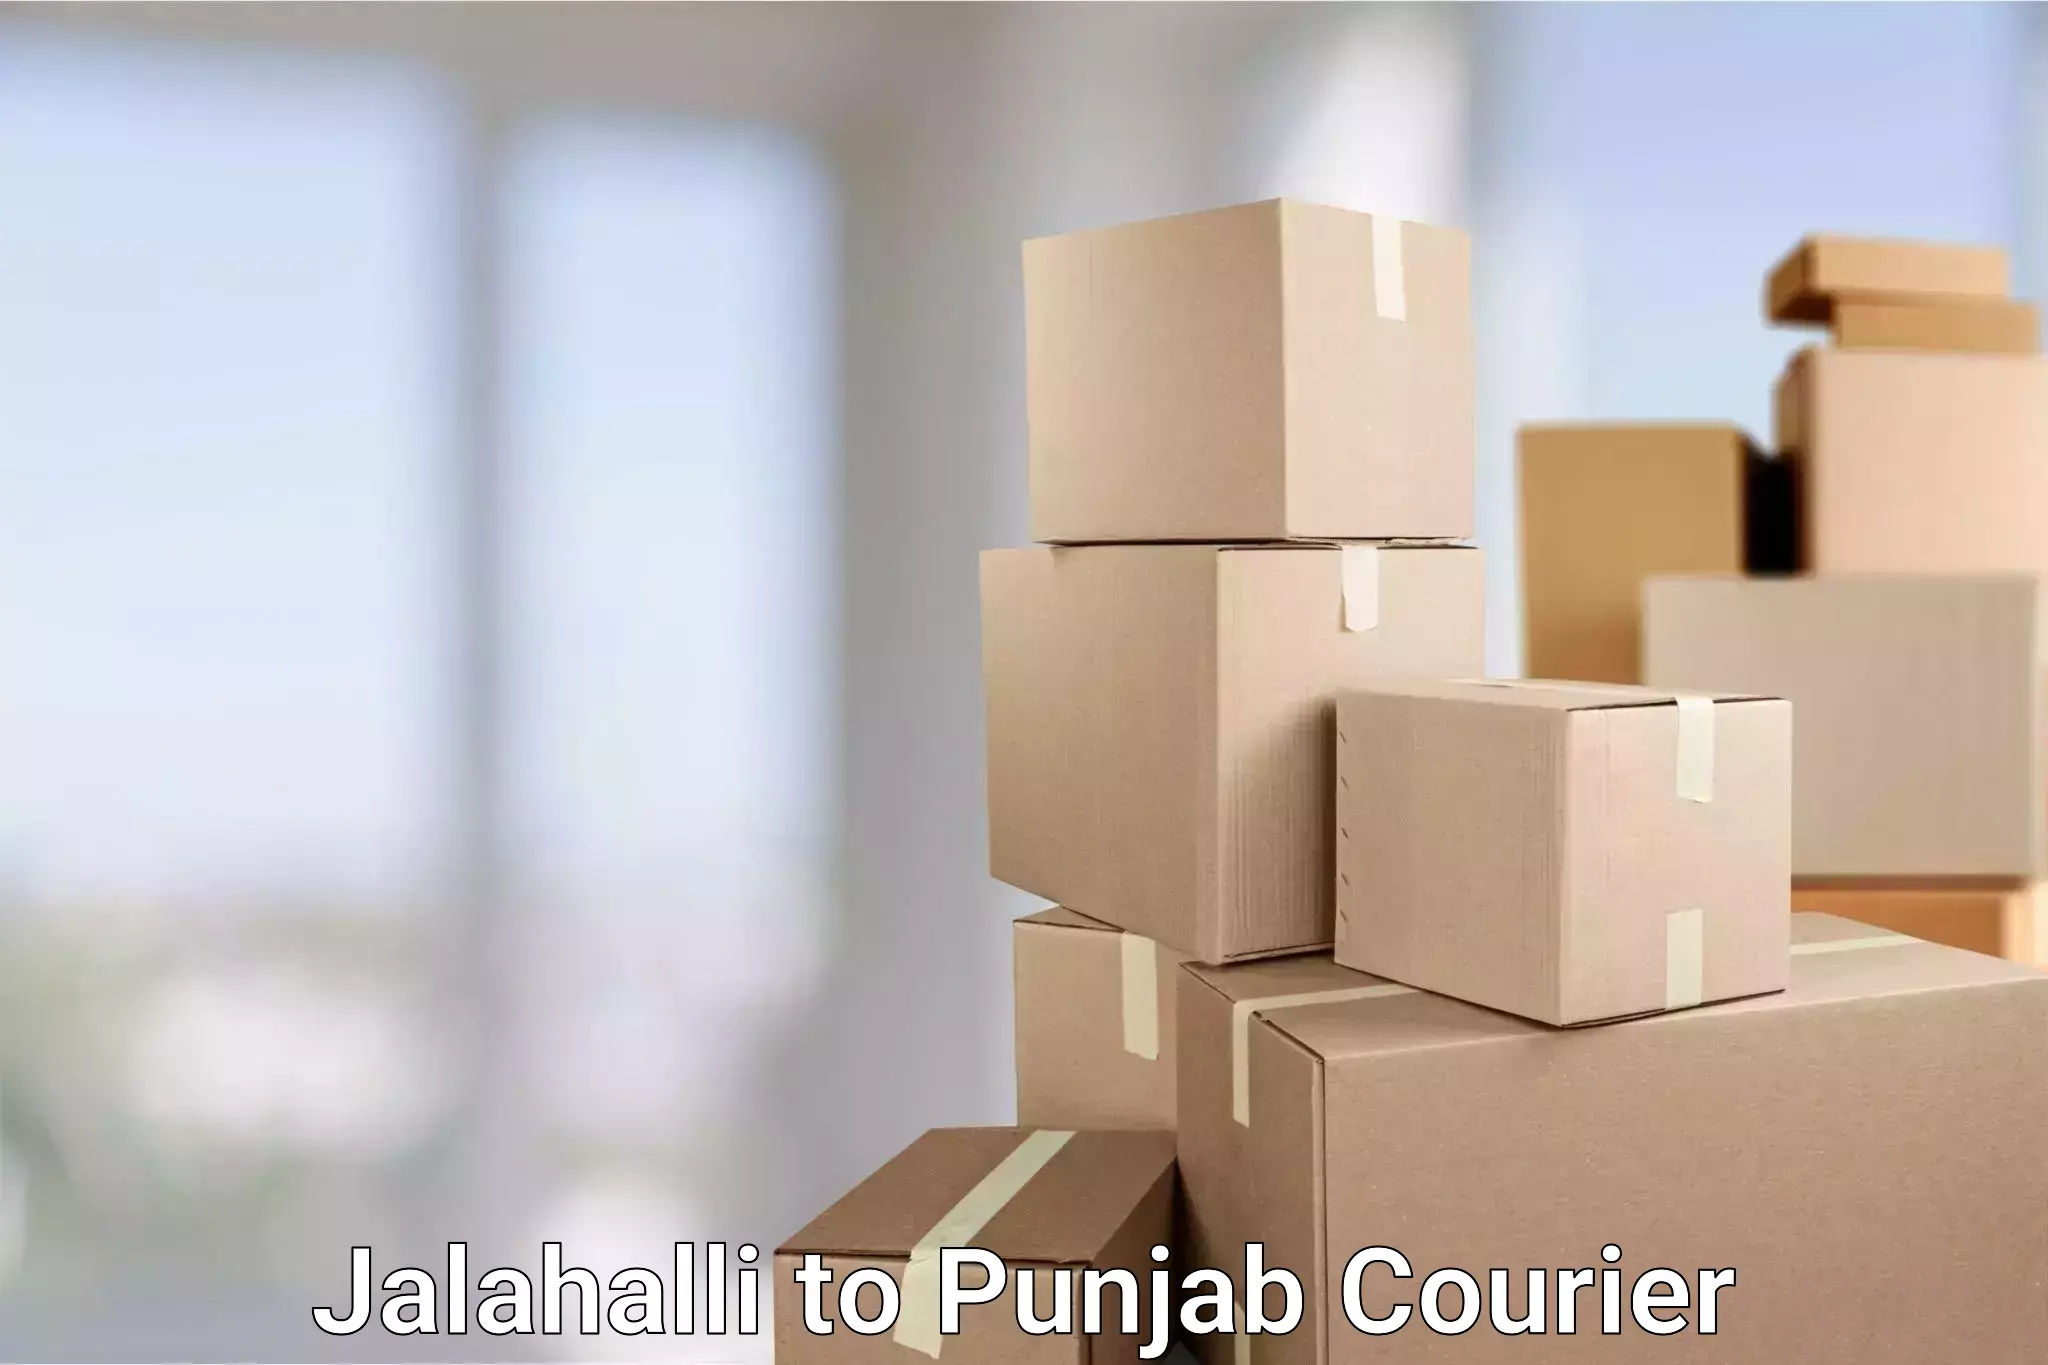 Parcel service for businesses Jalahalli to Punjab